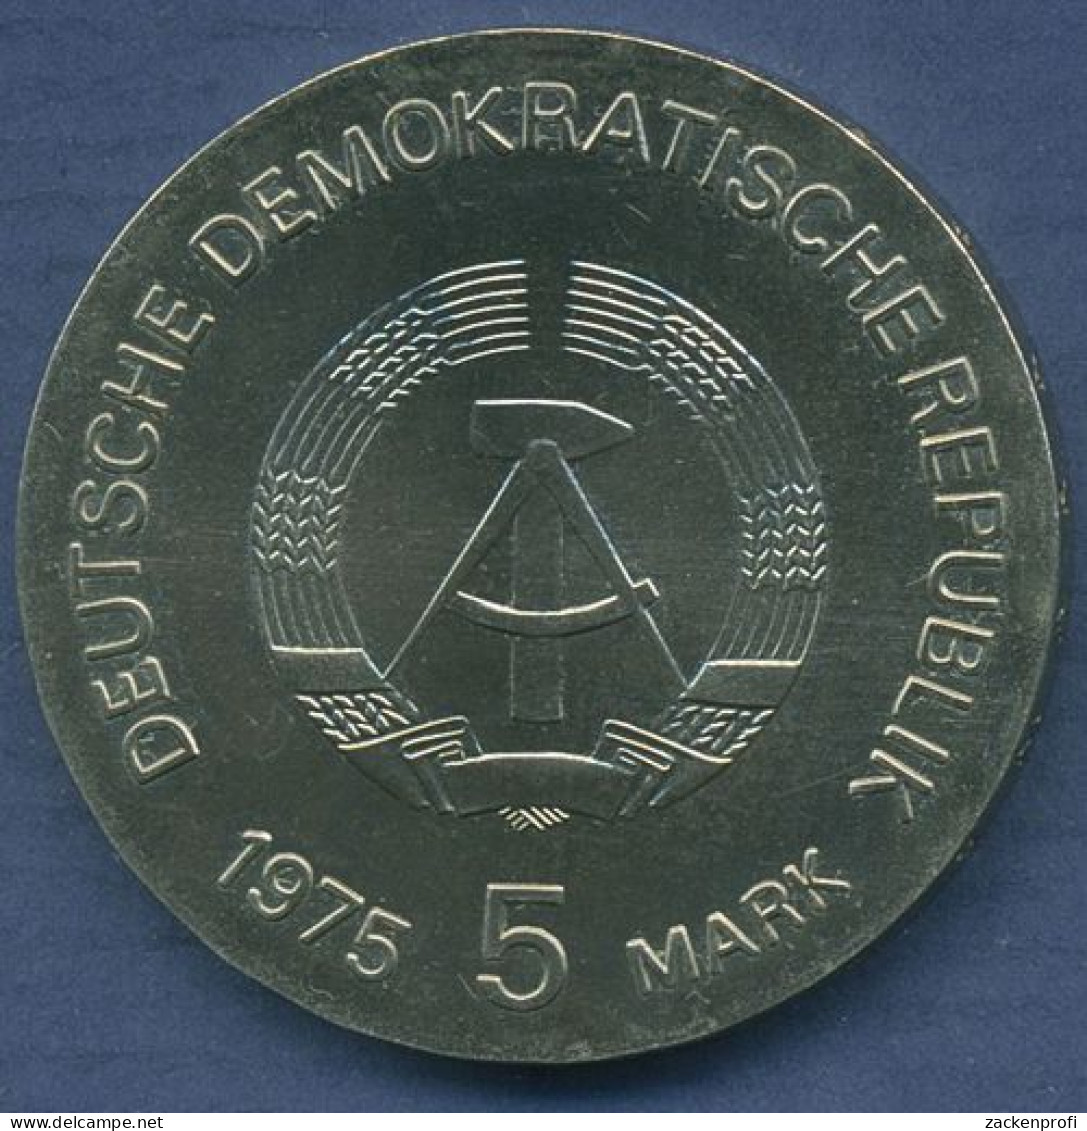 DDR 5 Mark 1975 Internationales Jahr Der Frau, J 1558 Vz/st (m2910) - 5 Mark